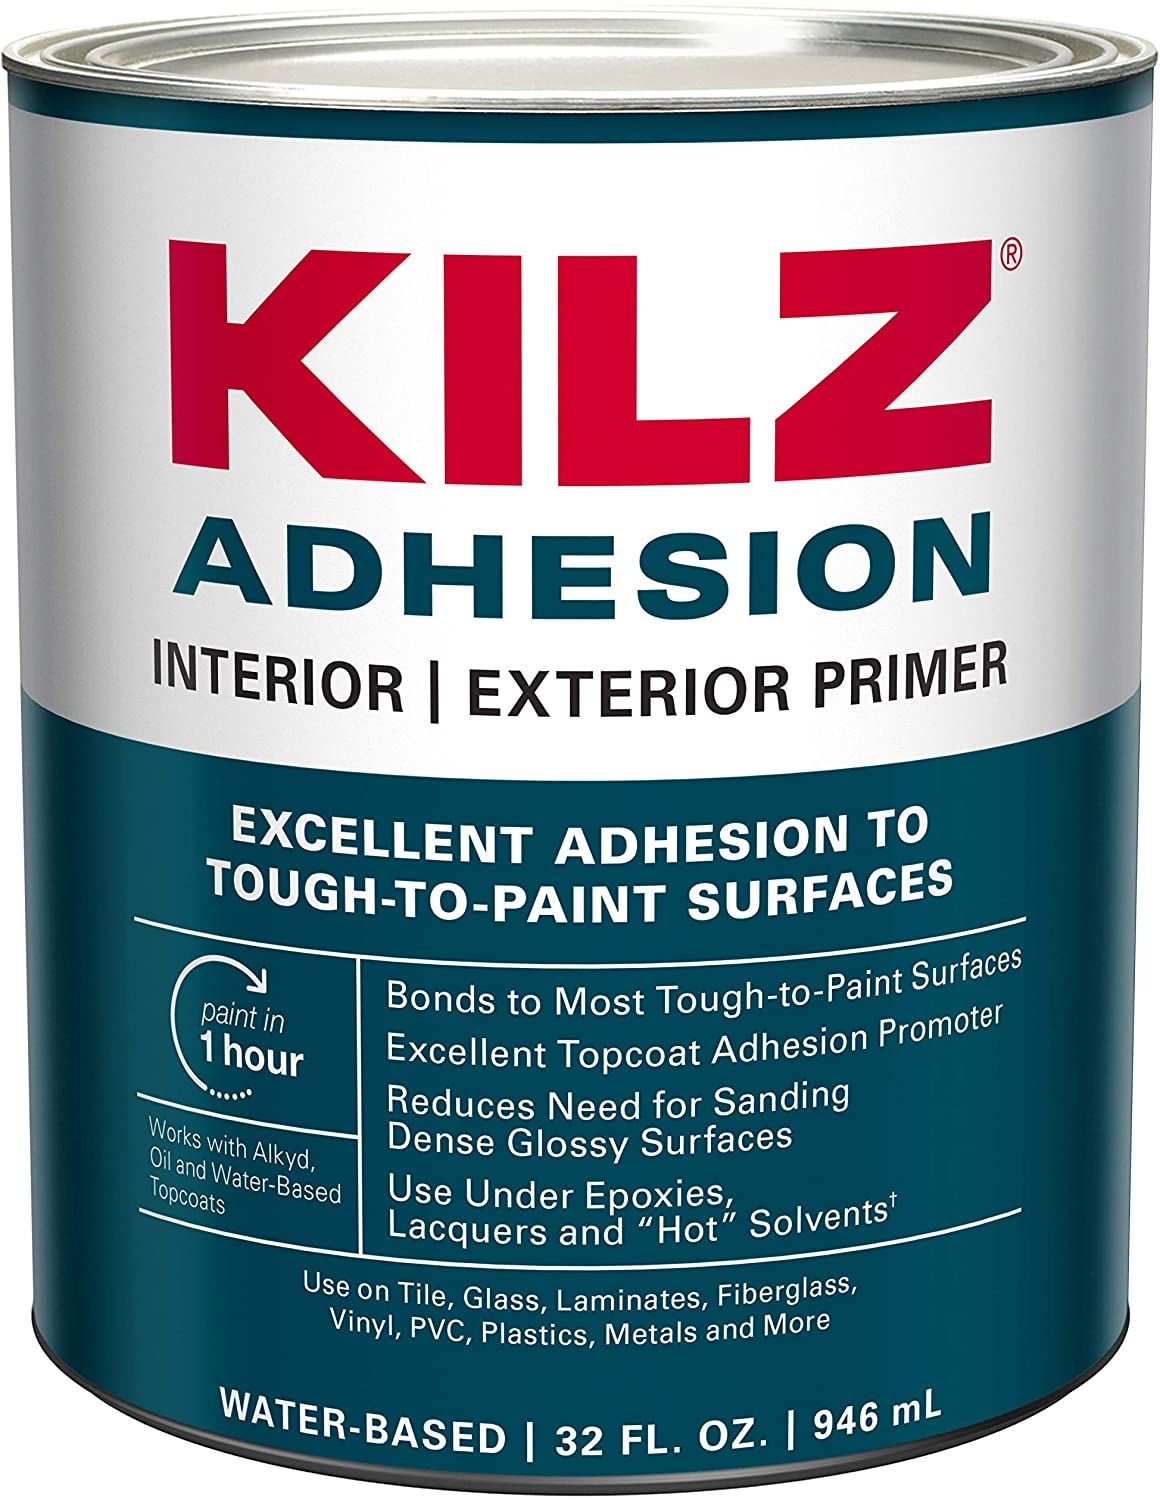 KILZ Adhesion High-Bonding Interior/Exterior Latex Primer